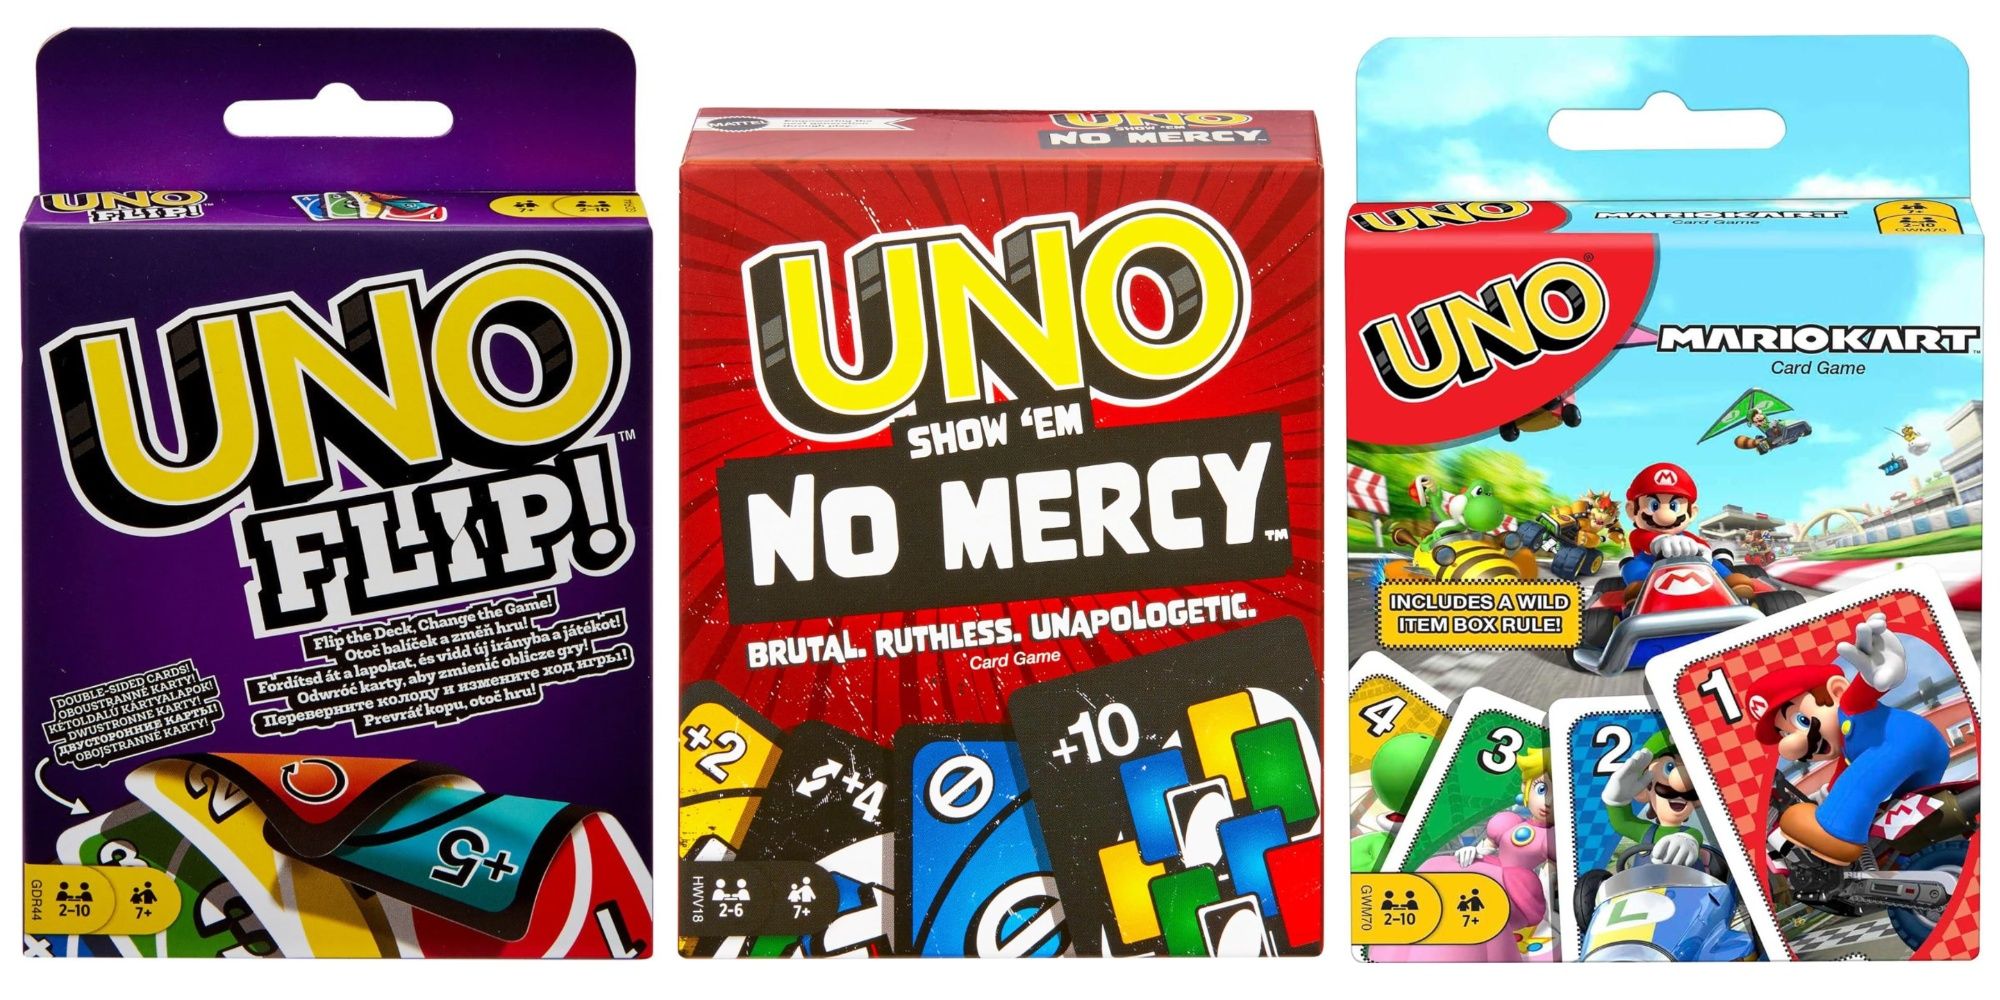 Best Uno Editions Featured Split Image Uno Flip, Uno Show 'em No Mercy, and Uno Mario Kart